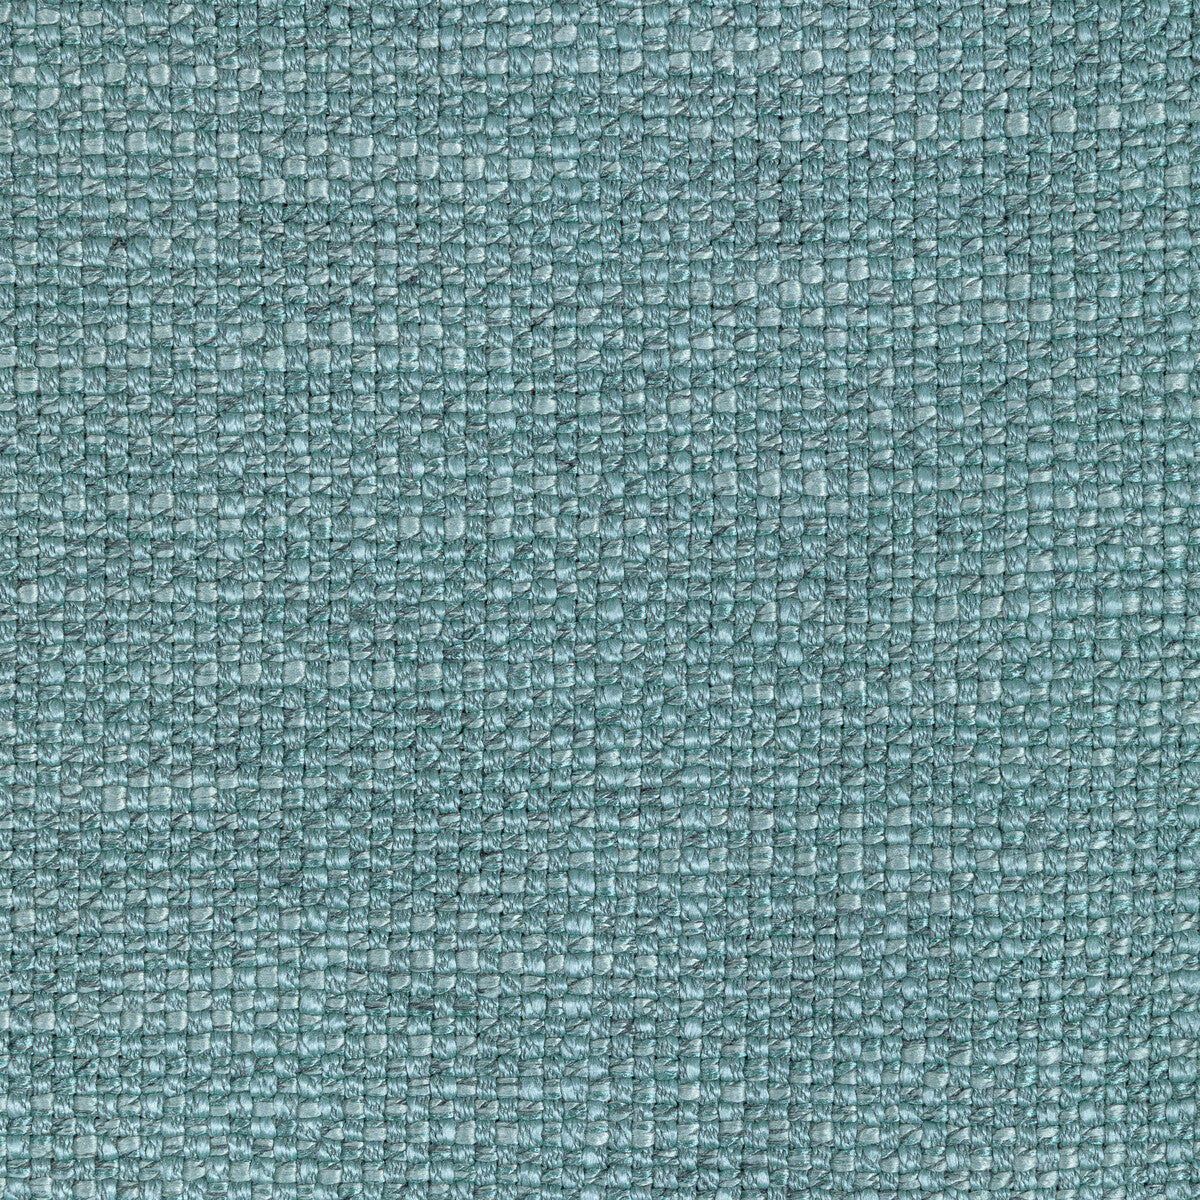 Kravet Design fabric in 36594-313 color - pattern 36594.313.0 - by Kravet Design in the Performance Kravetarmor collection